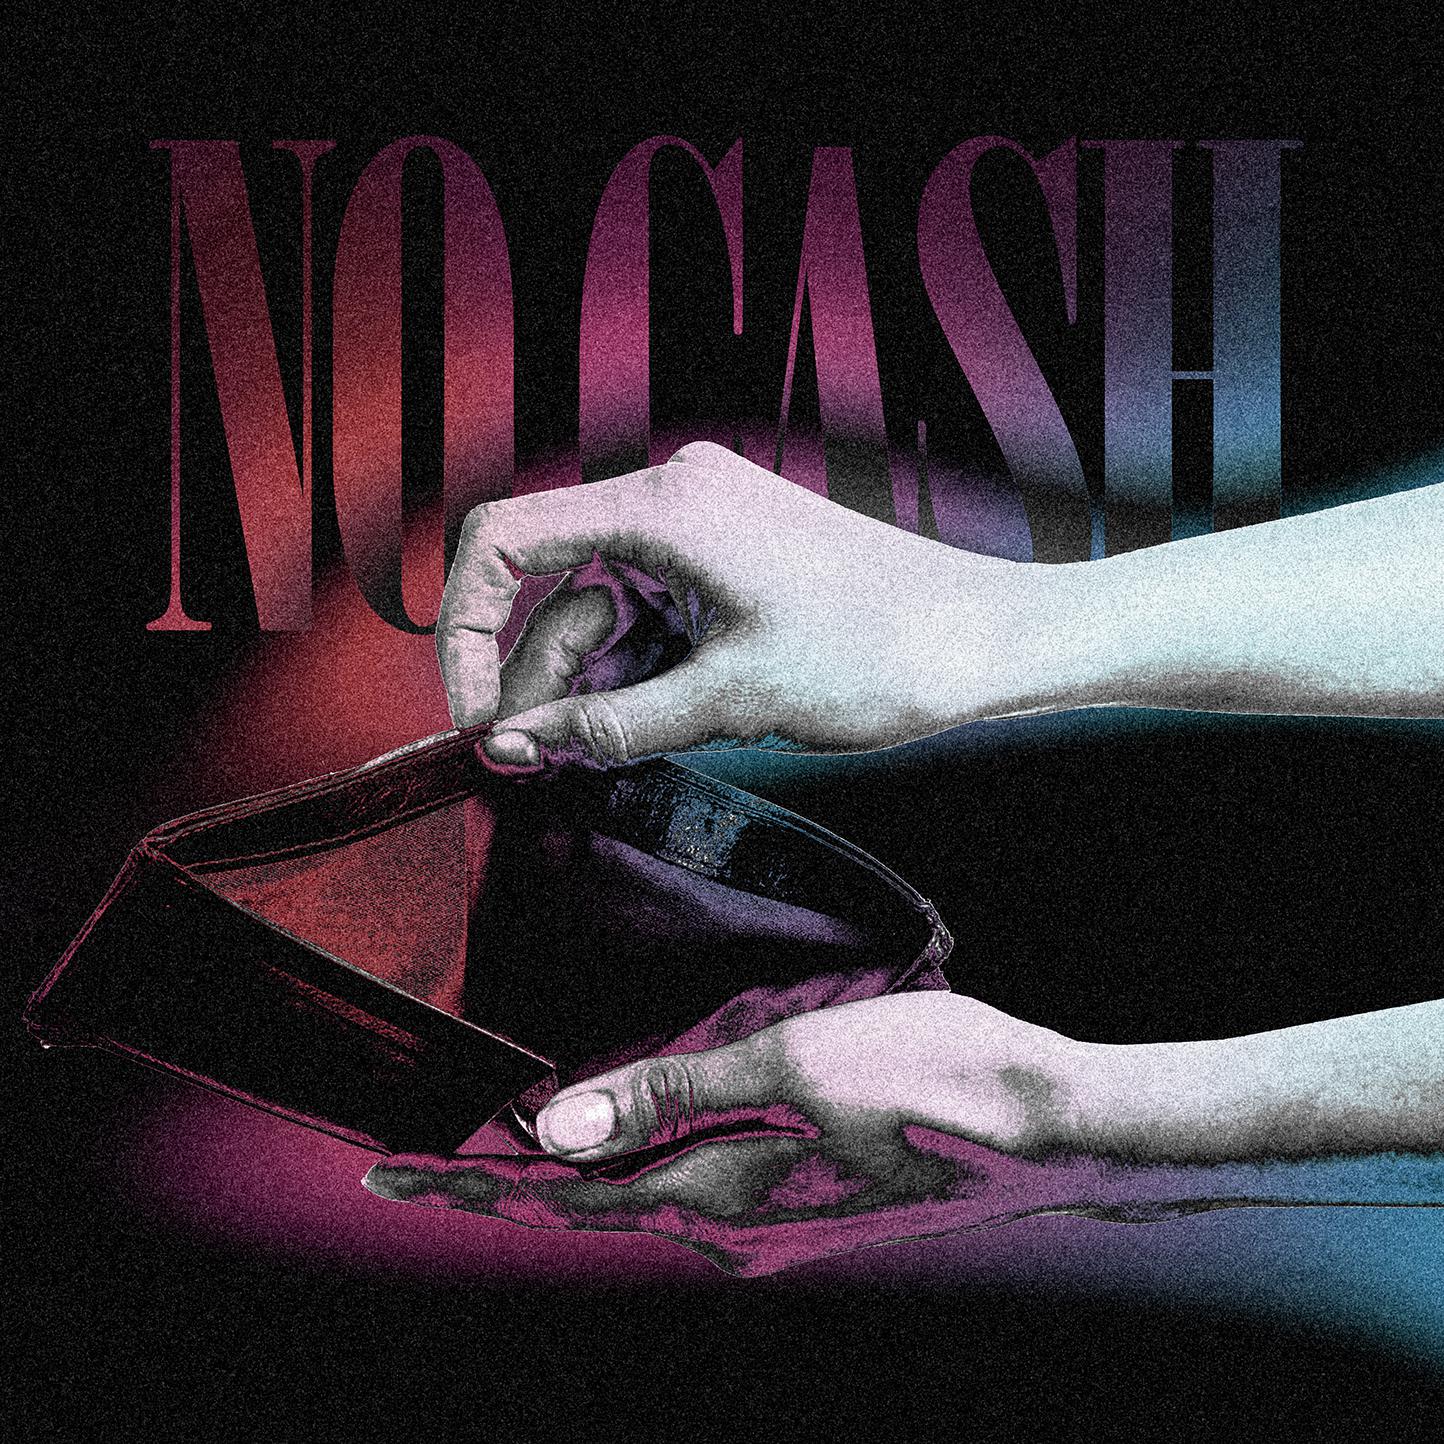 Постер альбома No Cash